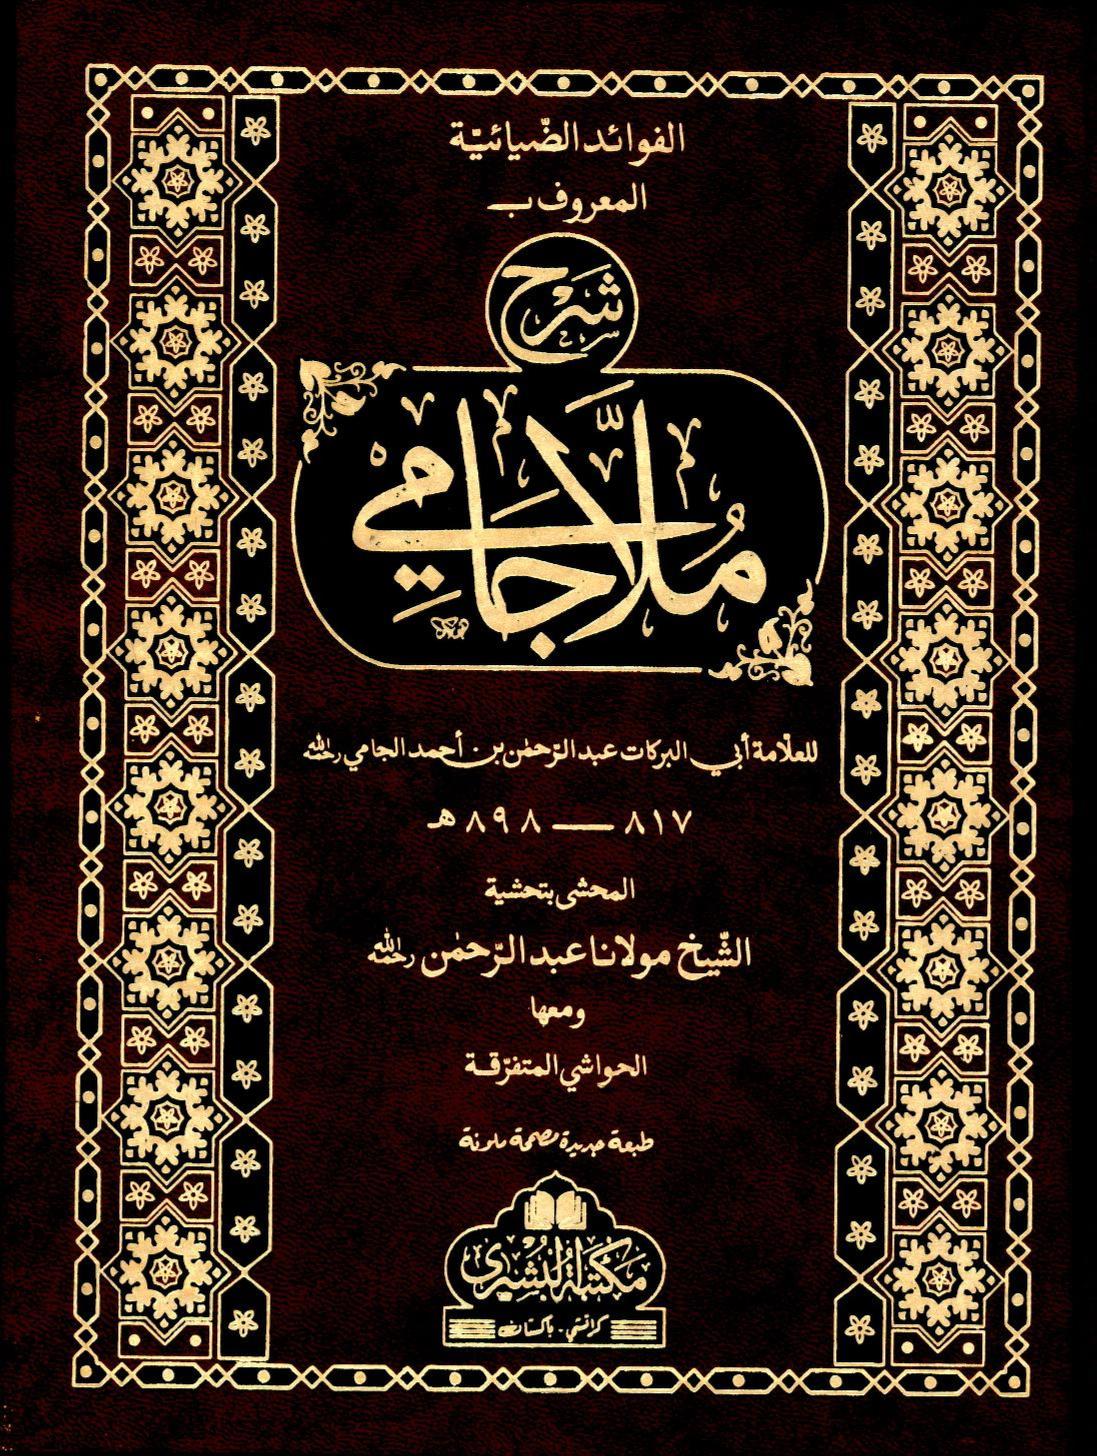 Sharh E Mulla Jami By Abdul Rahman Bin Ahmad Al Jami